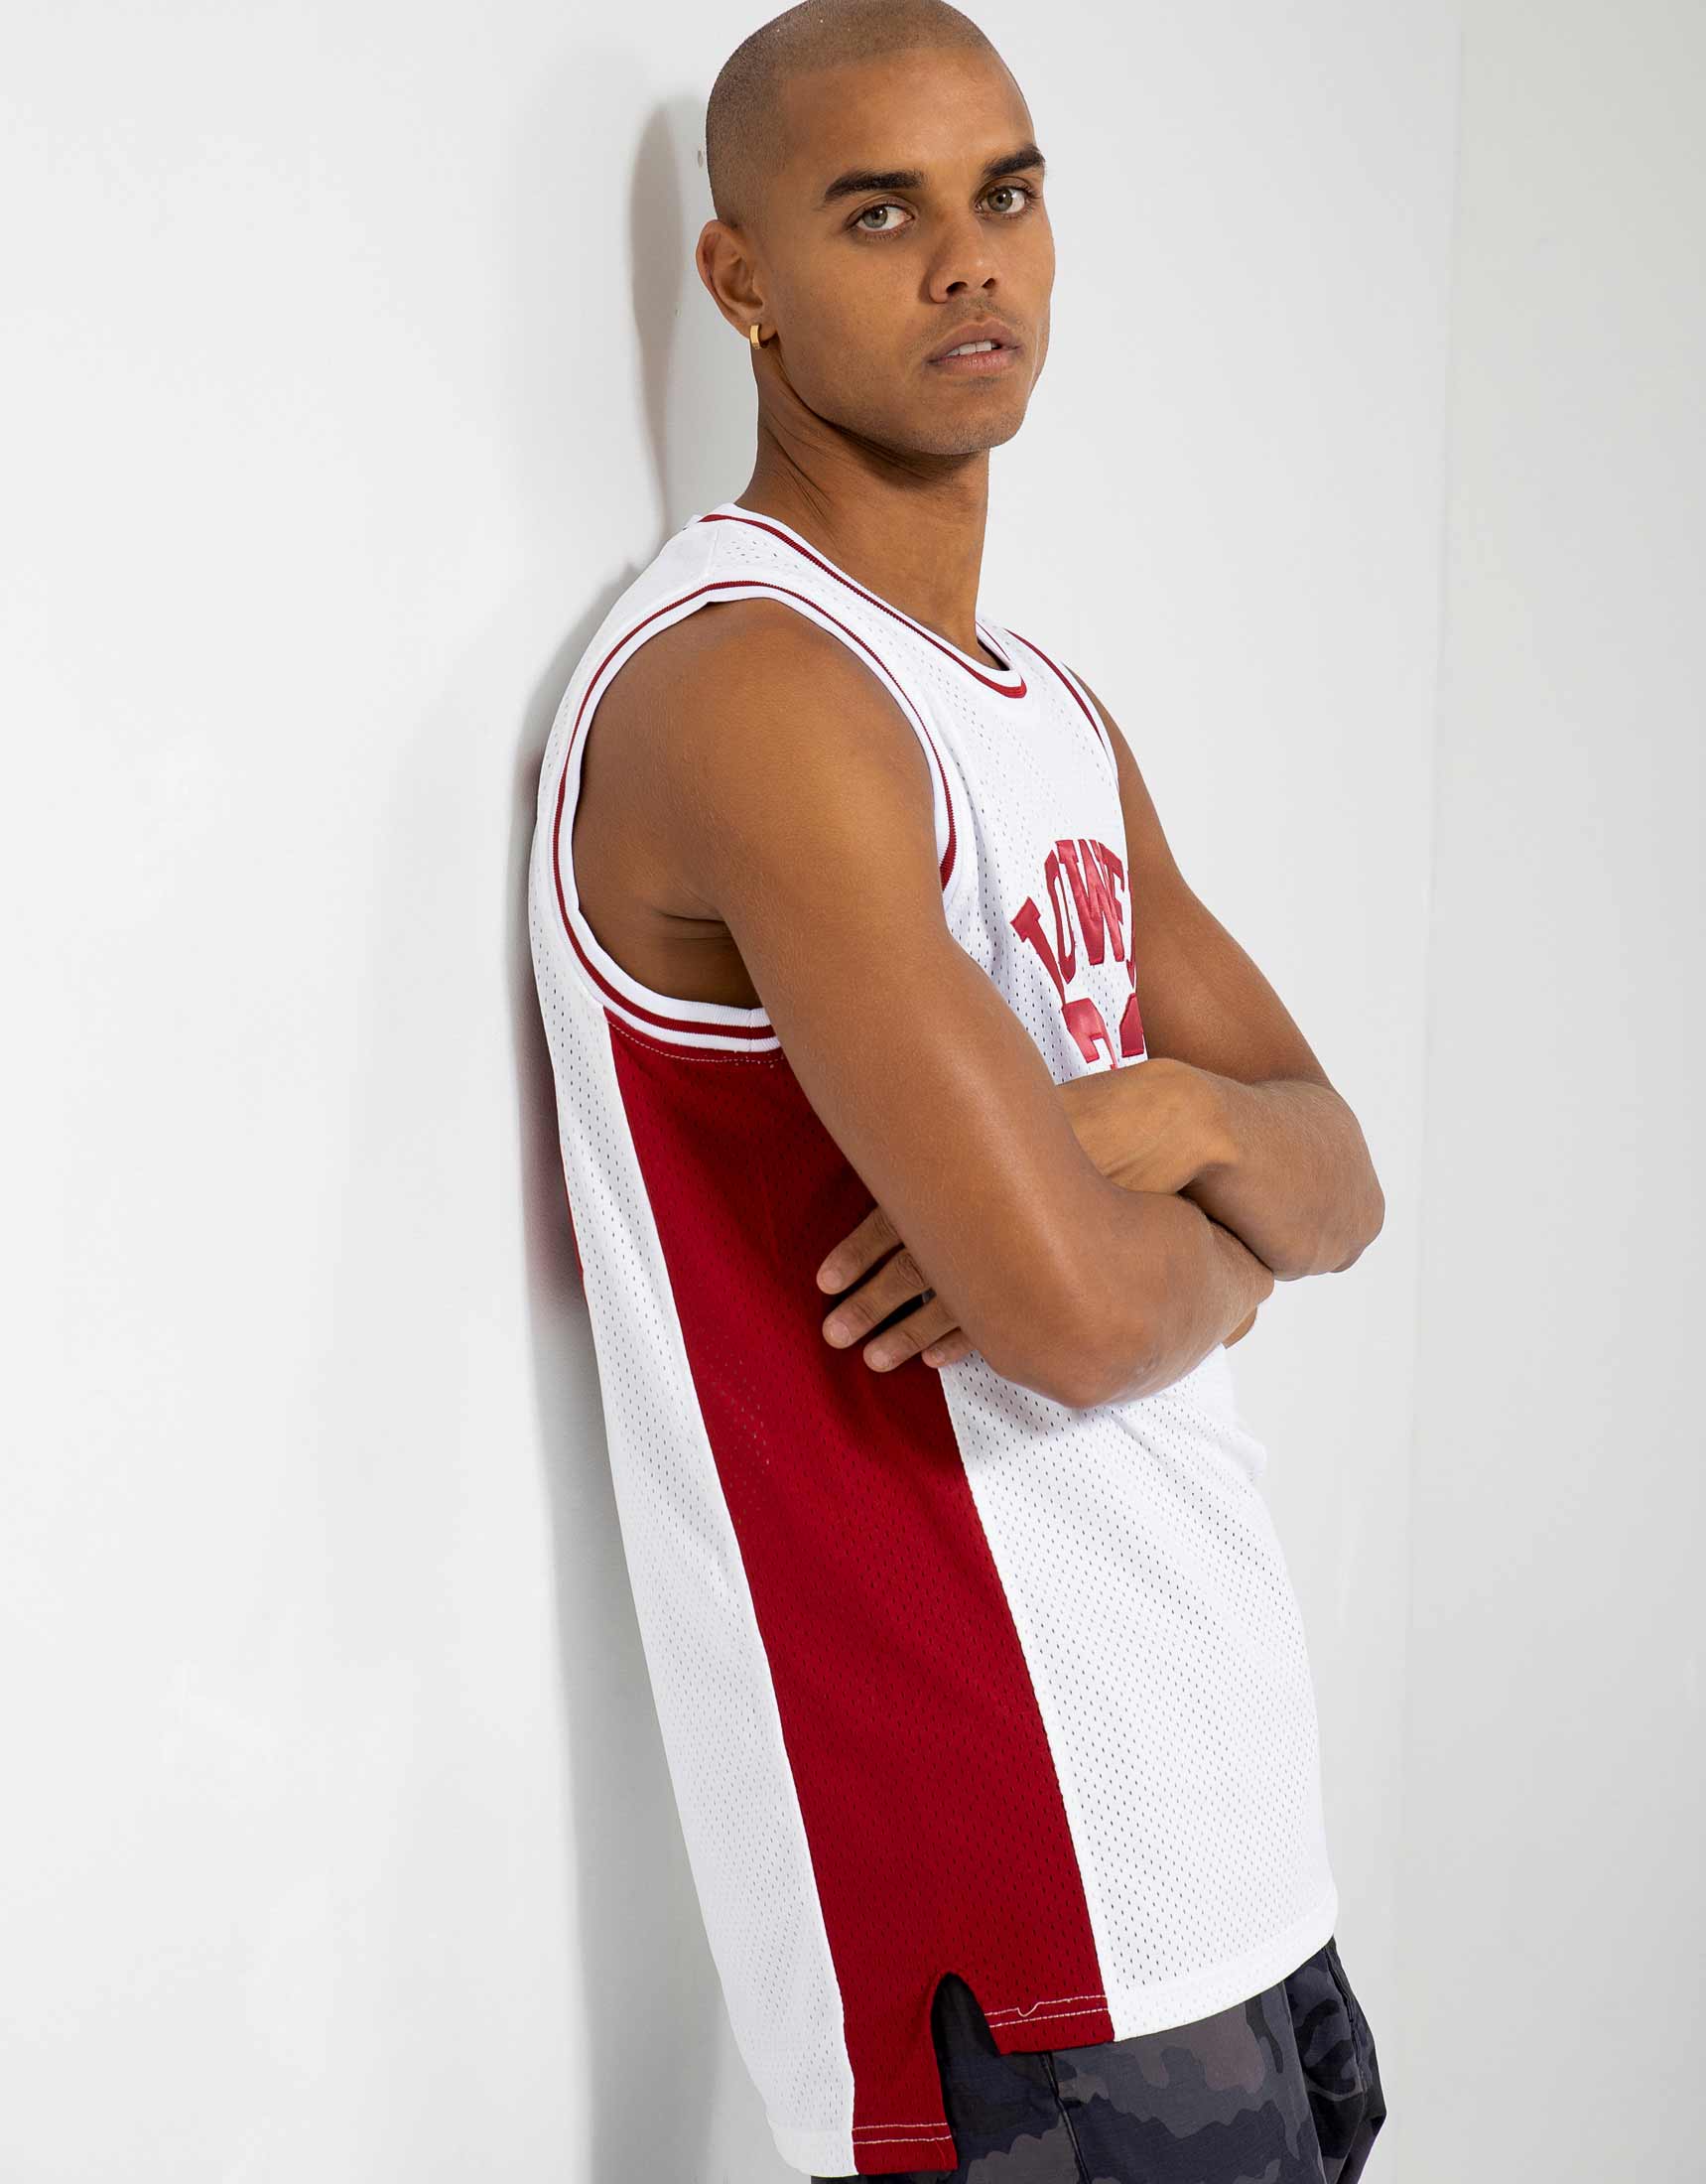 Kobe Bryant #33 Lower Merion High School Jersey (White) — SportsWRLDD